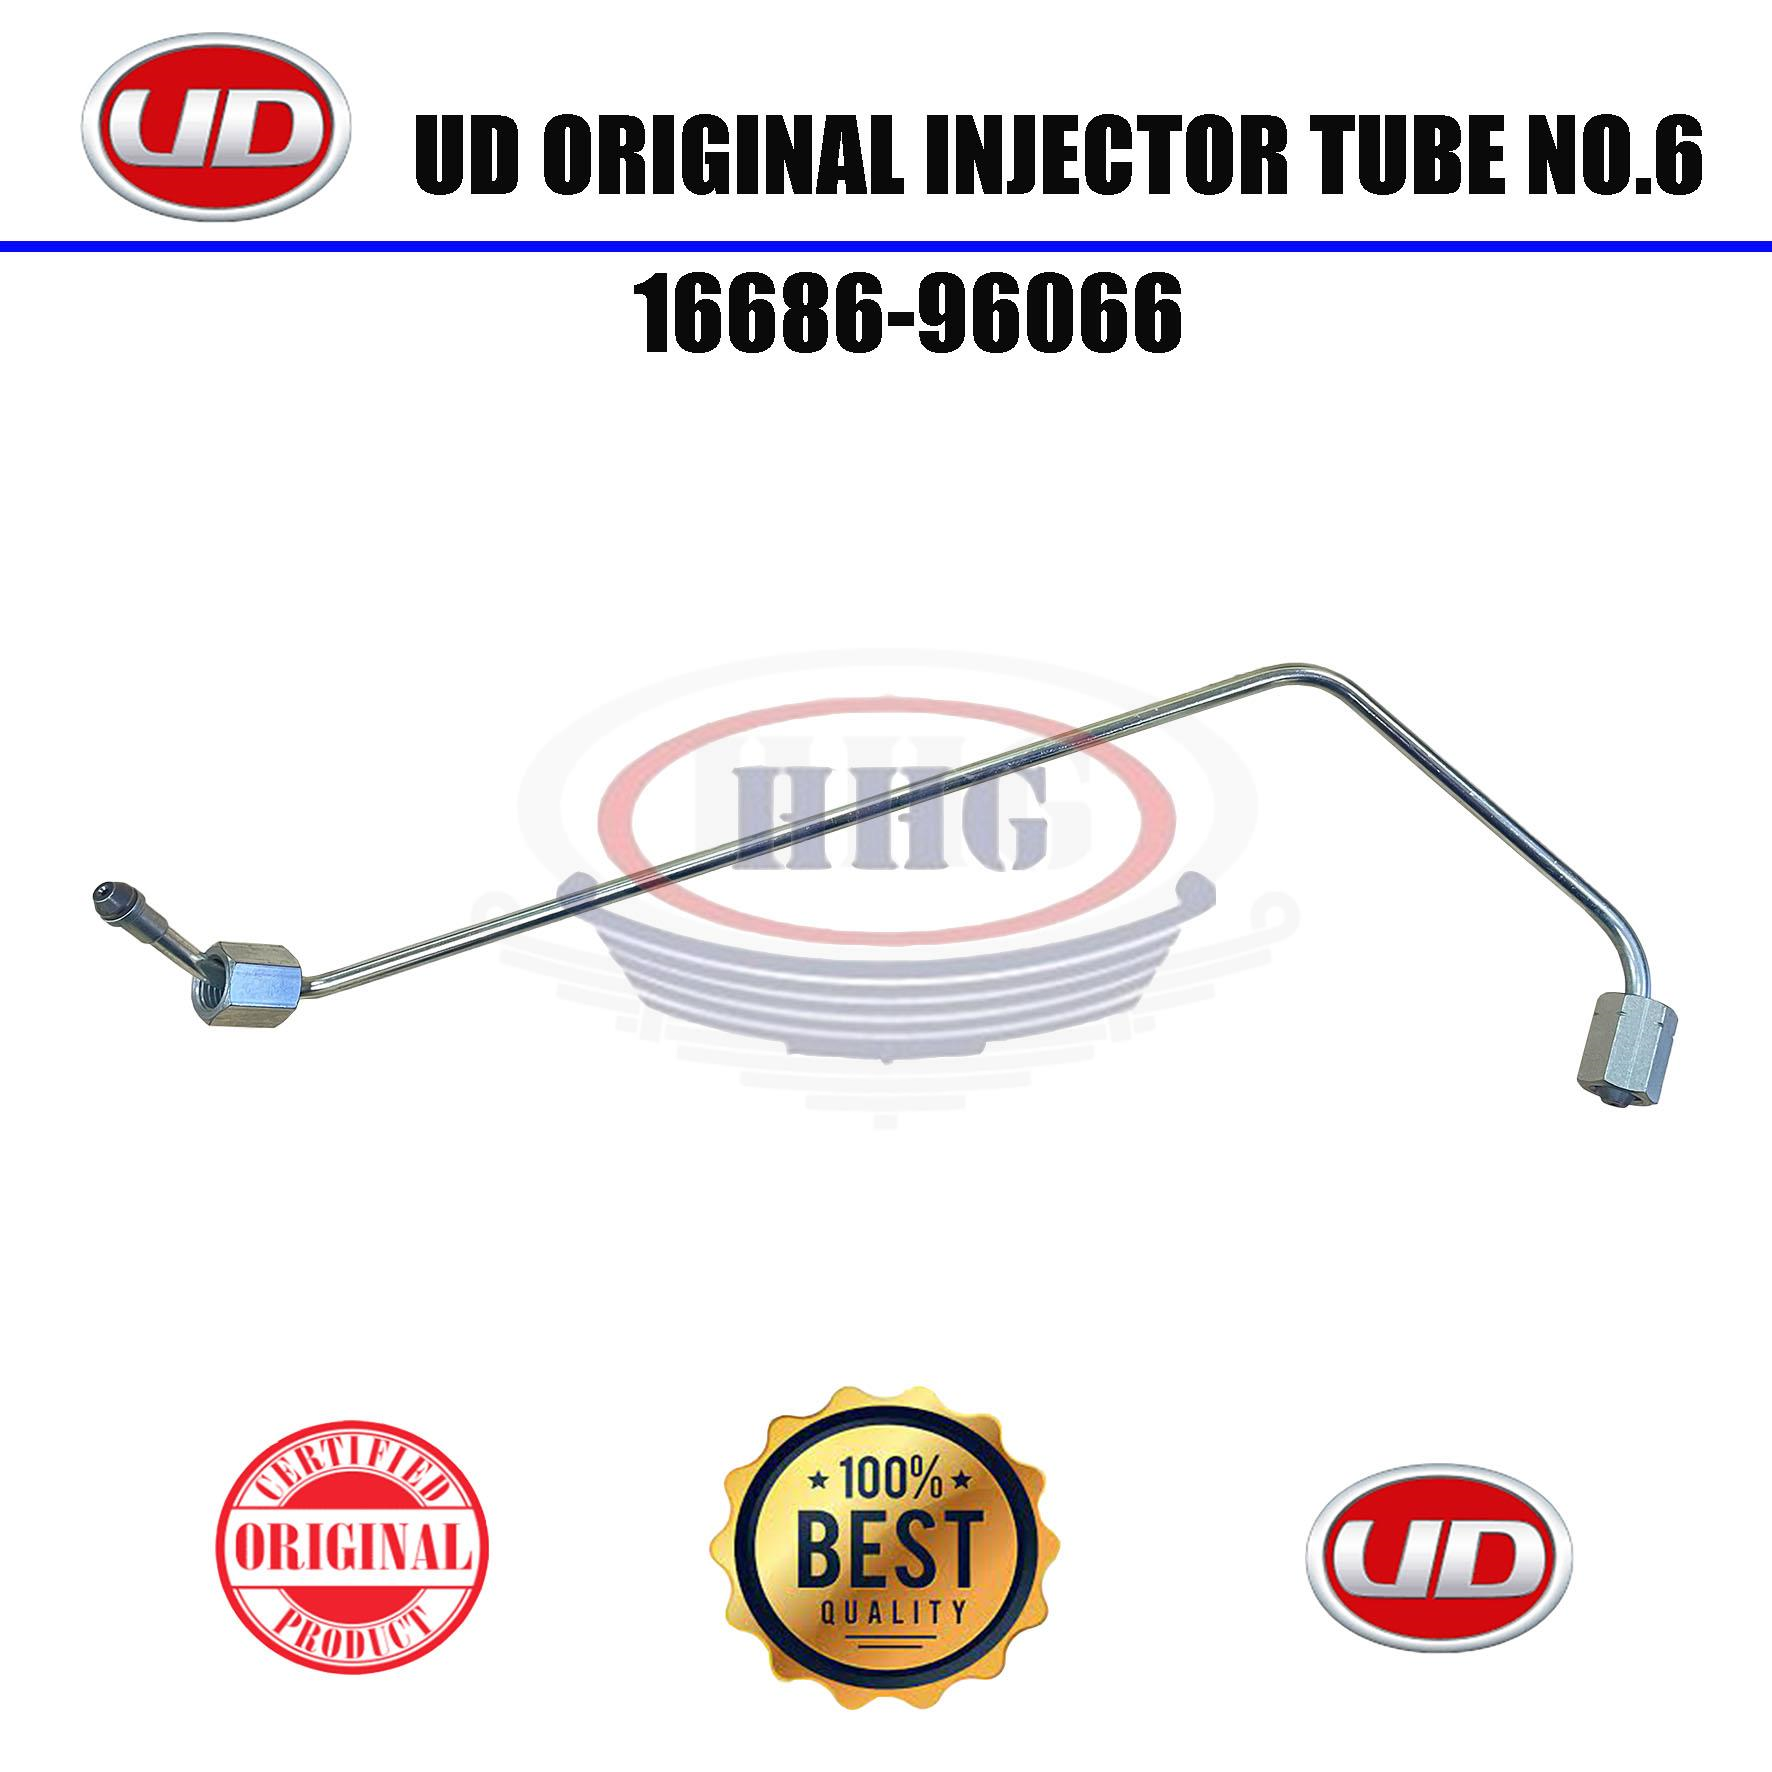 UD Original PE6T PF6 Injector Tube No.6 (16686-96066)